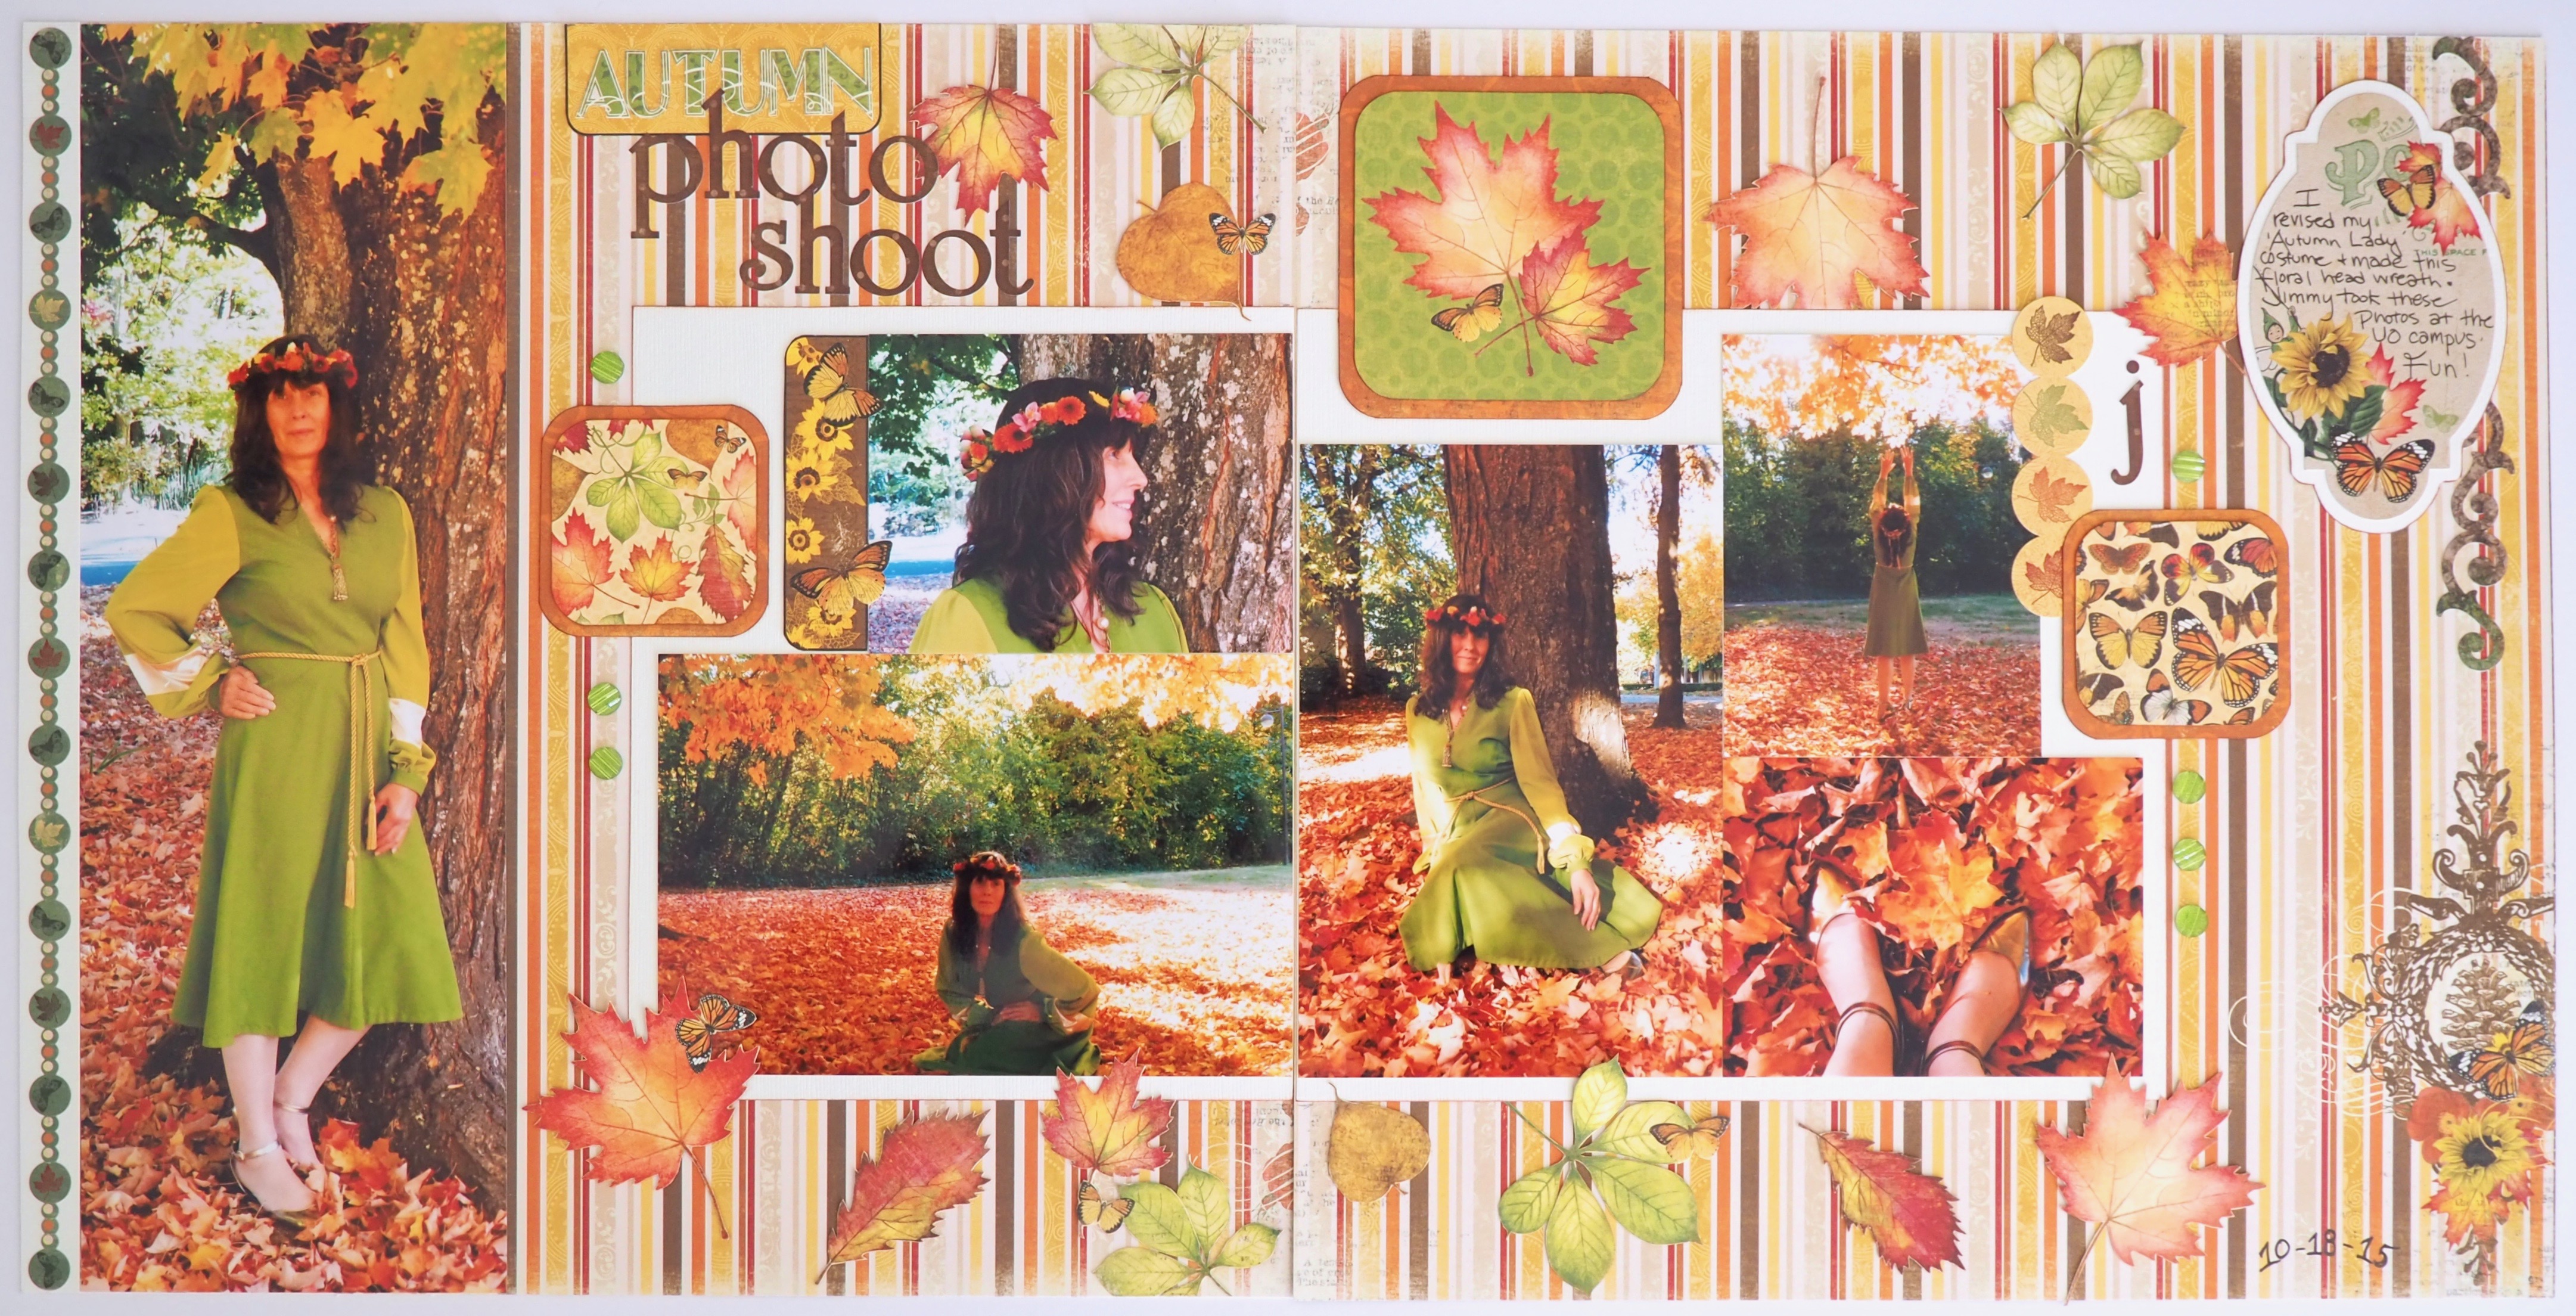 Under The Plum Blossom Tree, Autumn Photo Shoot - A Scrapbook Layout